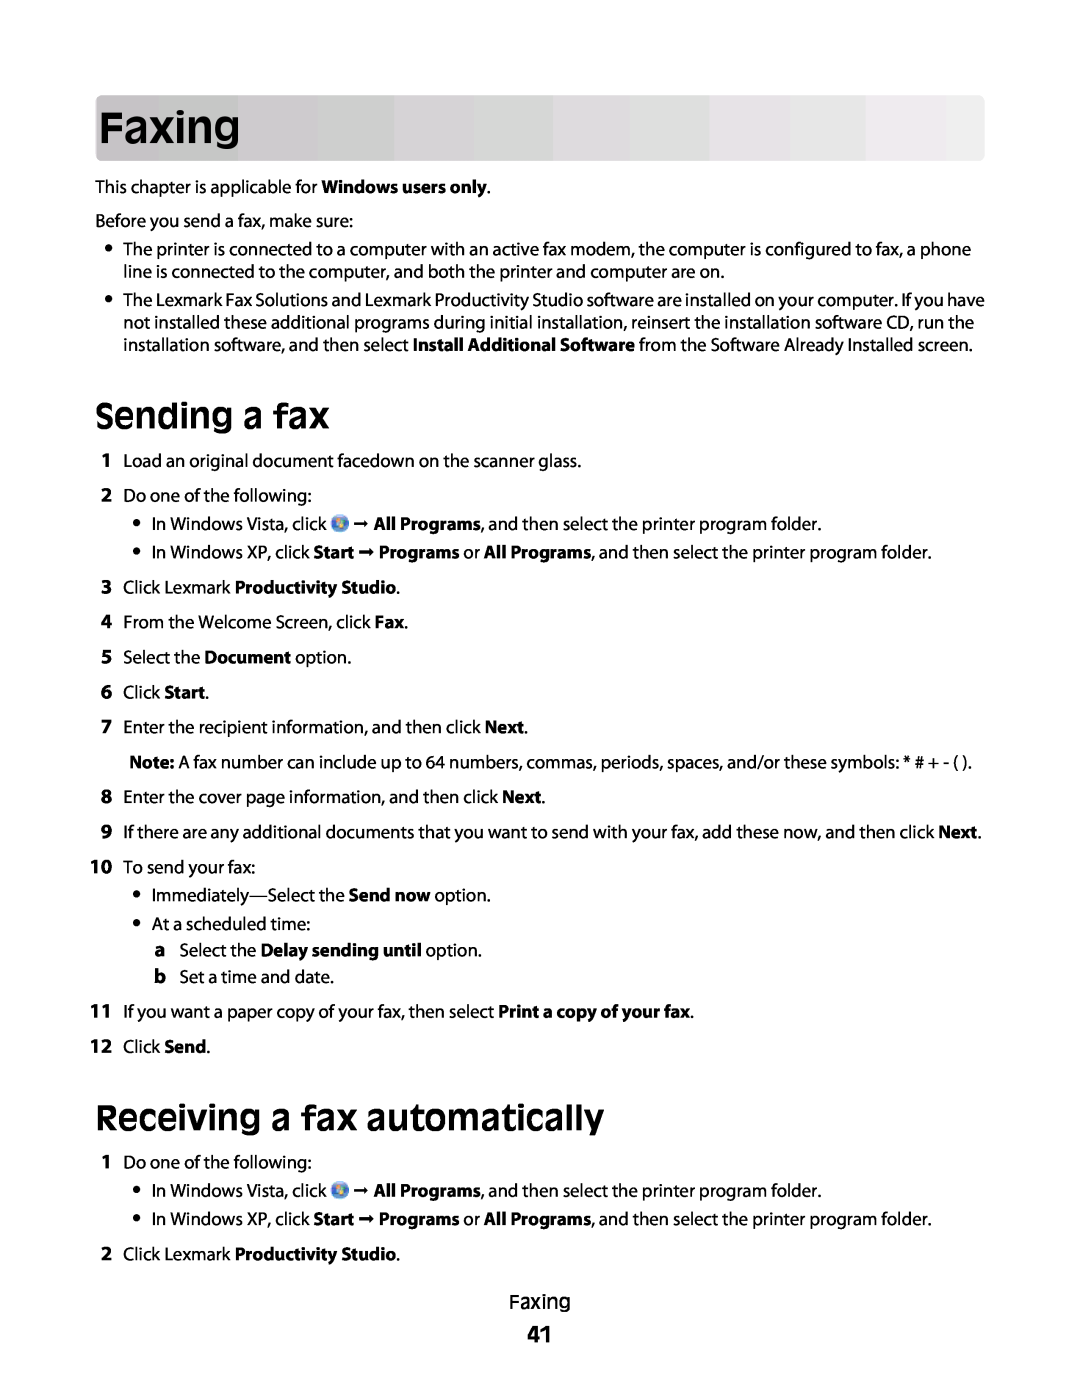 Lexmark 4445, 4433 manual Faxing, Sending a fax, Receiving a fax automatically, Click Lexmark Productivity Studio 